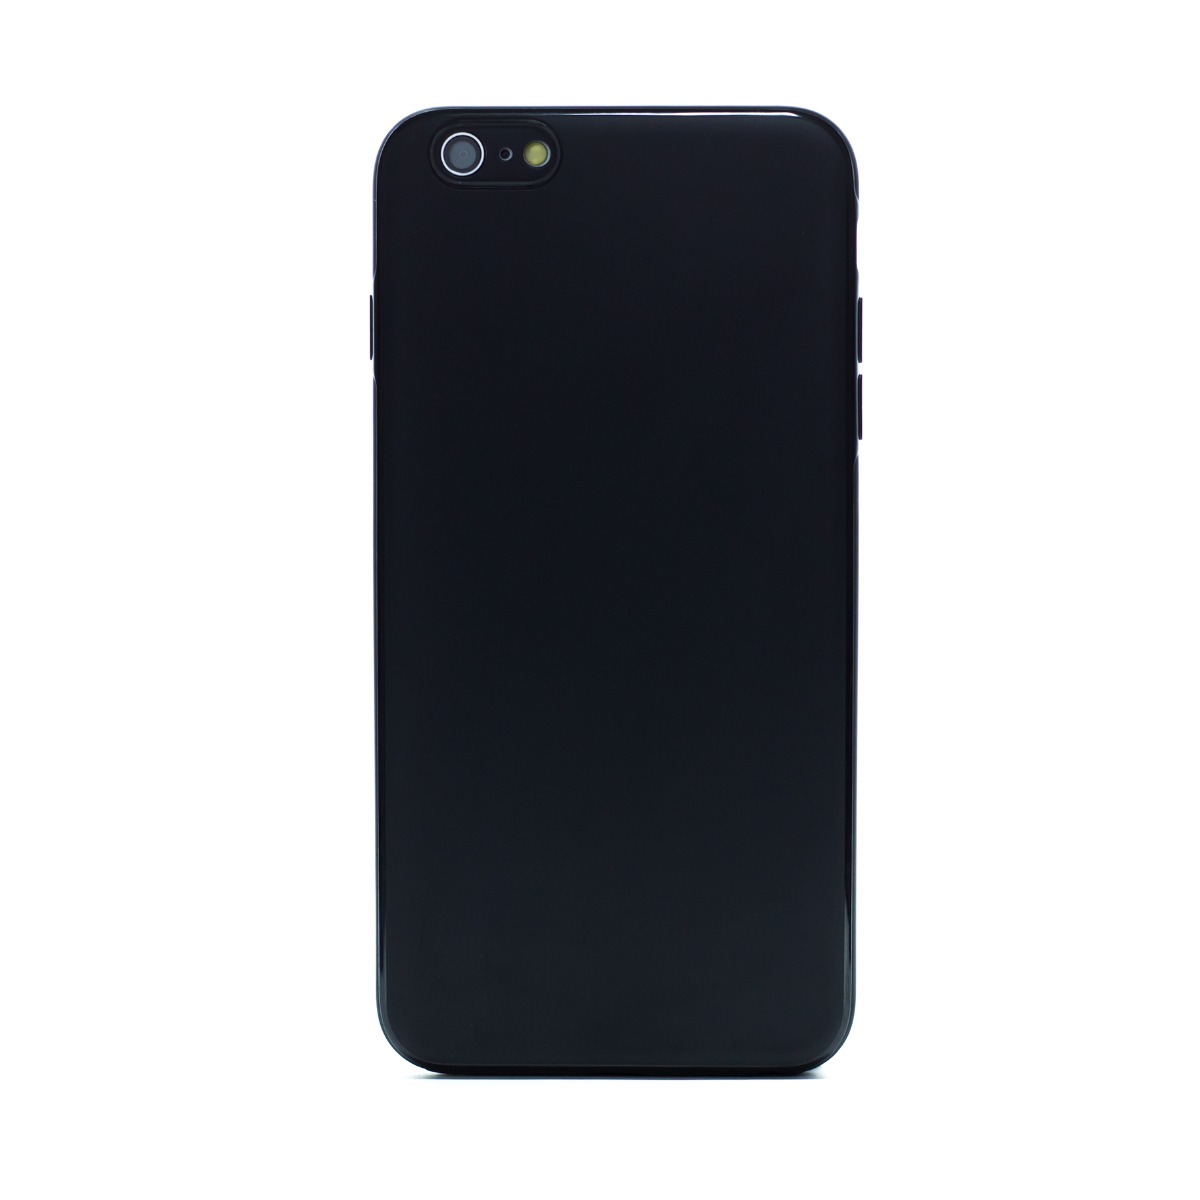 Husa spate silicon iPhone 6 Plus iShield Negru mat thumb